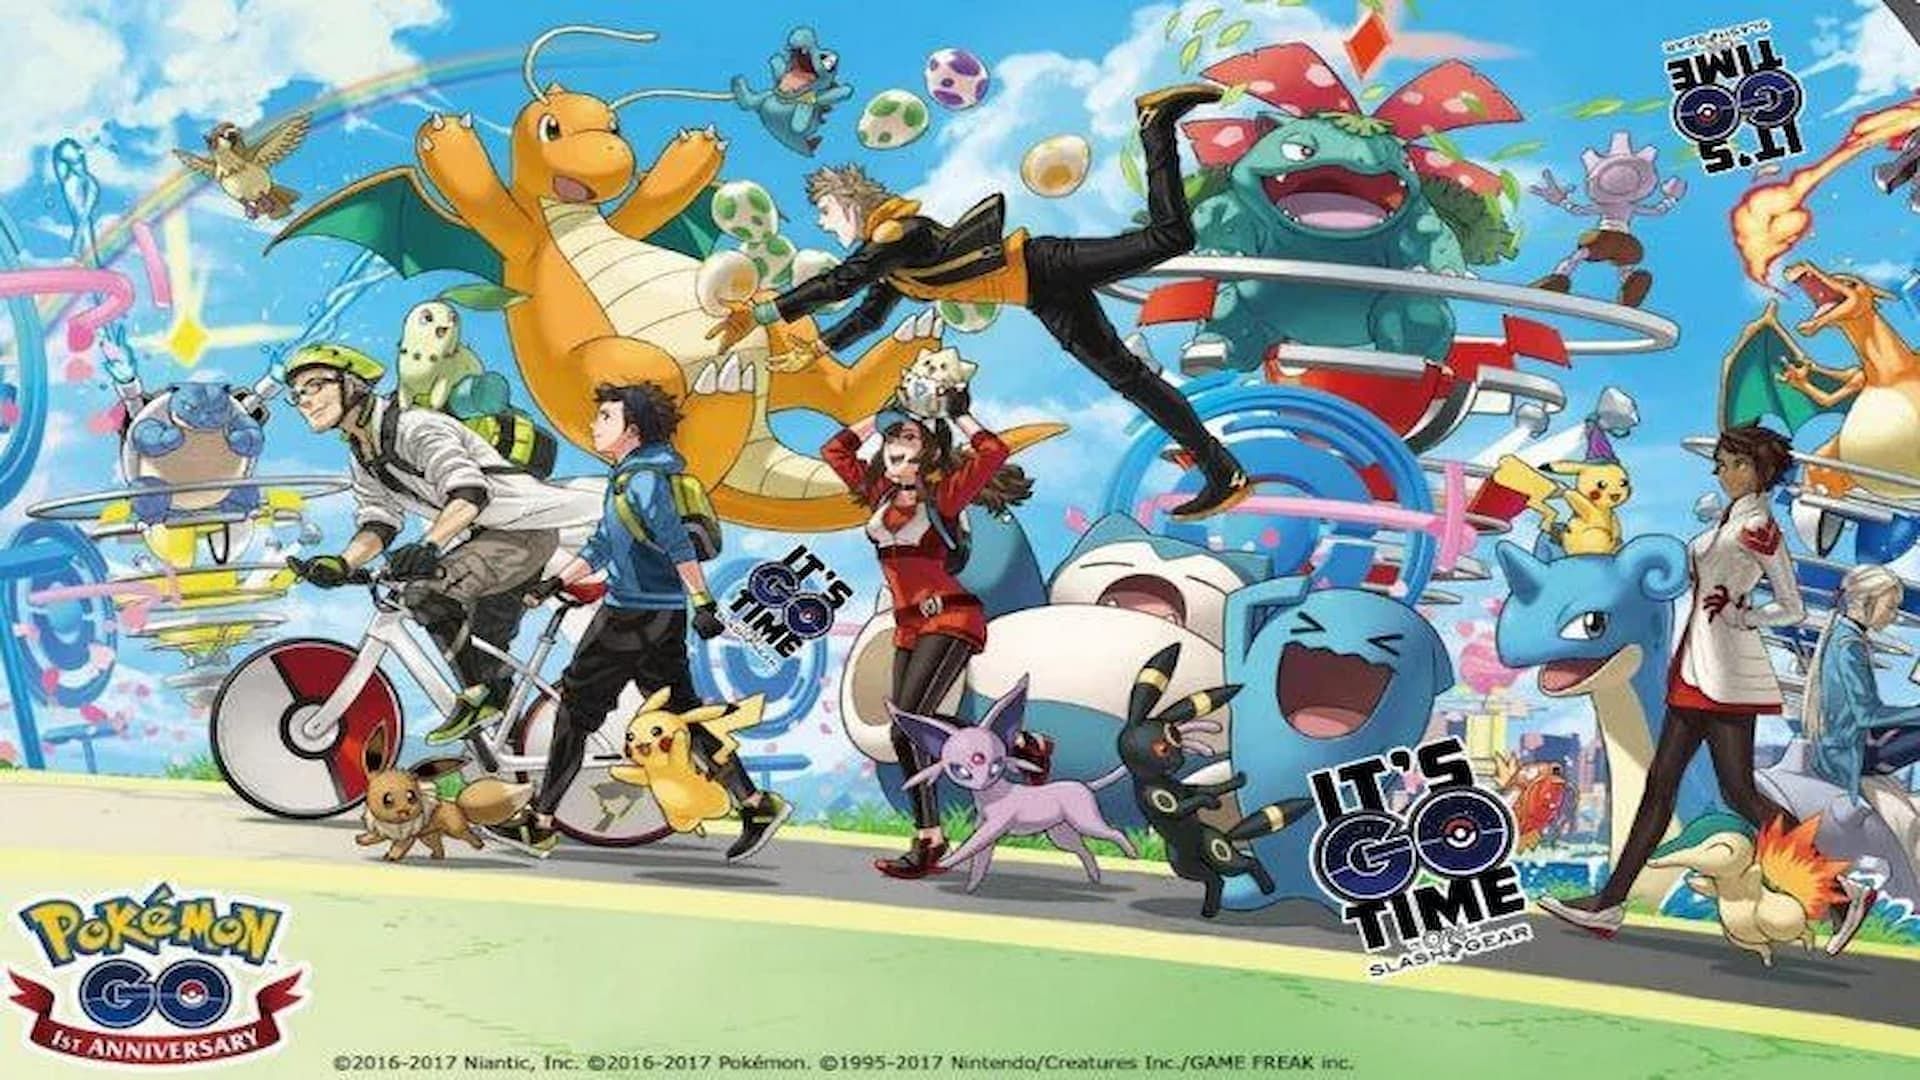 Official poster for Pokemon GO 1st Anniversary 2017 (Image via Niantic)